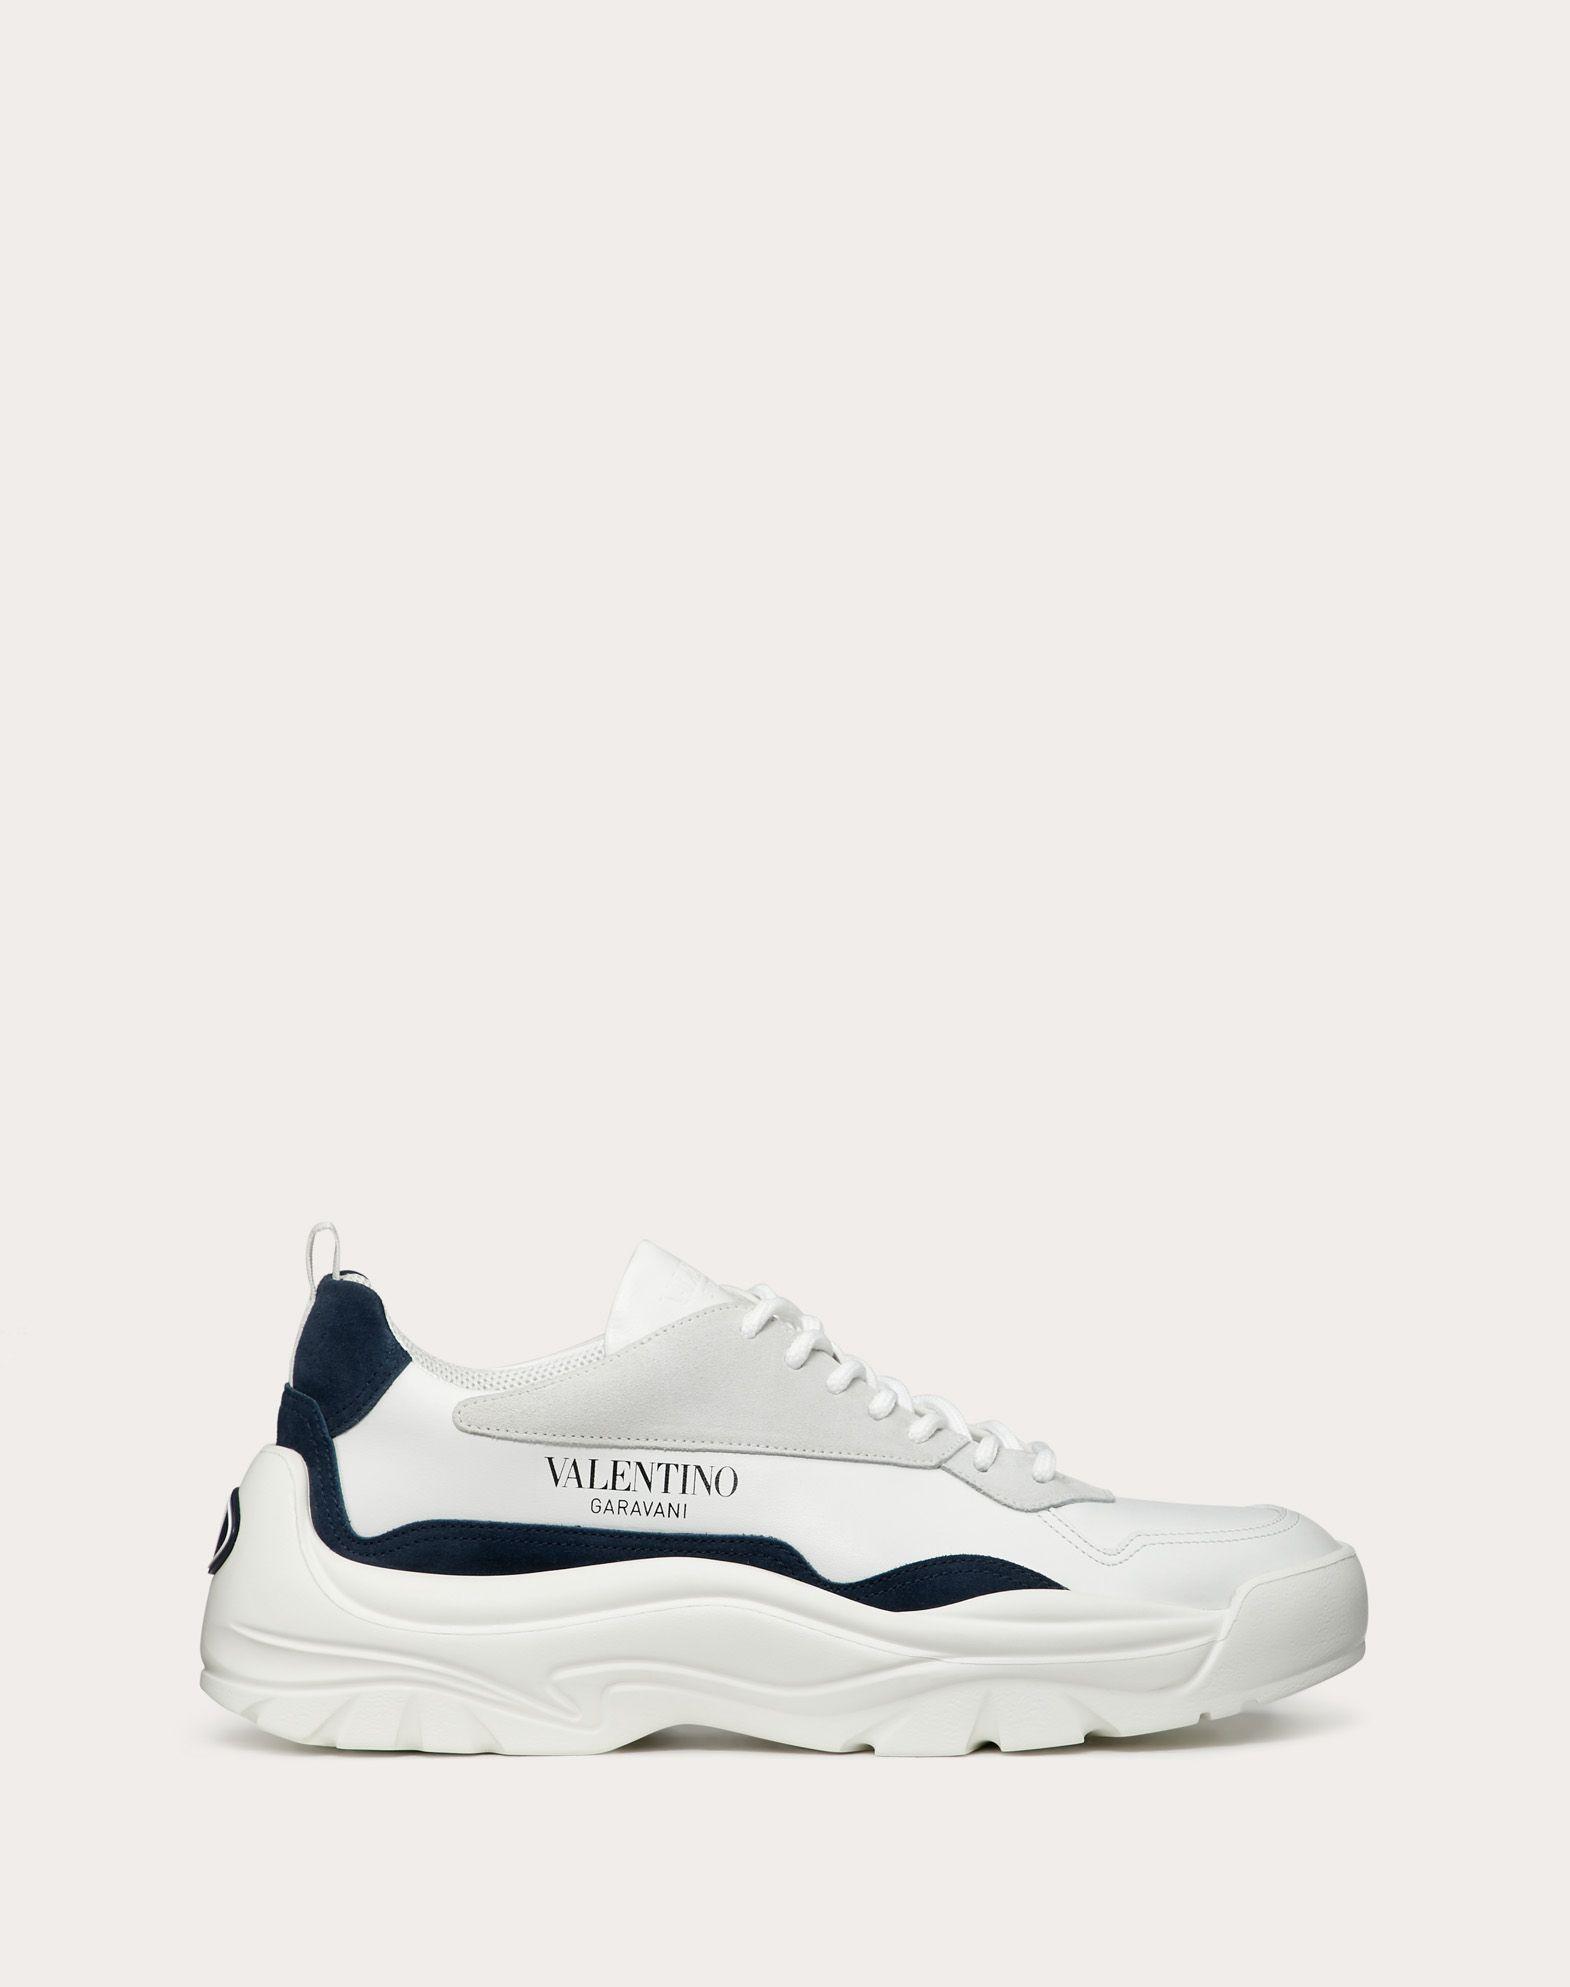 Valentino Garavani Leather Gumboy Calfskin Sneaker in White for Men - Lyst